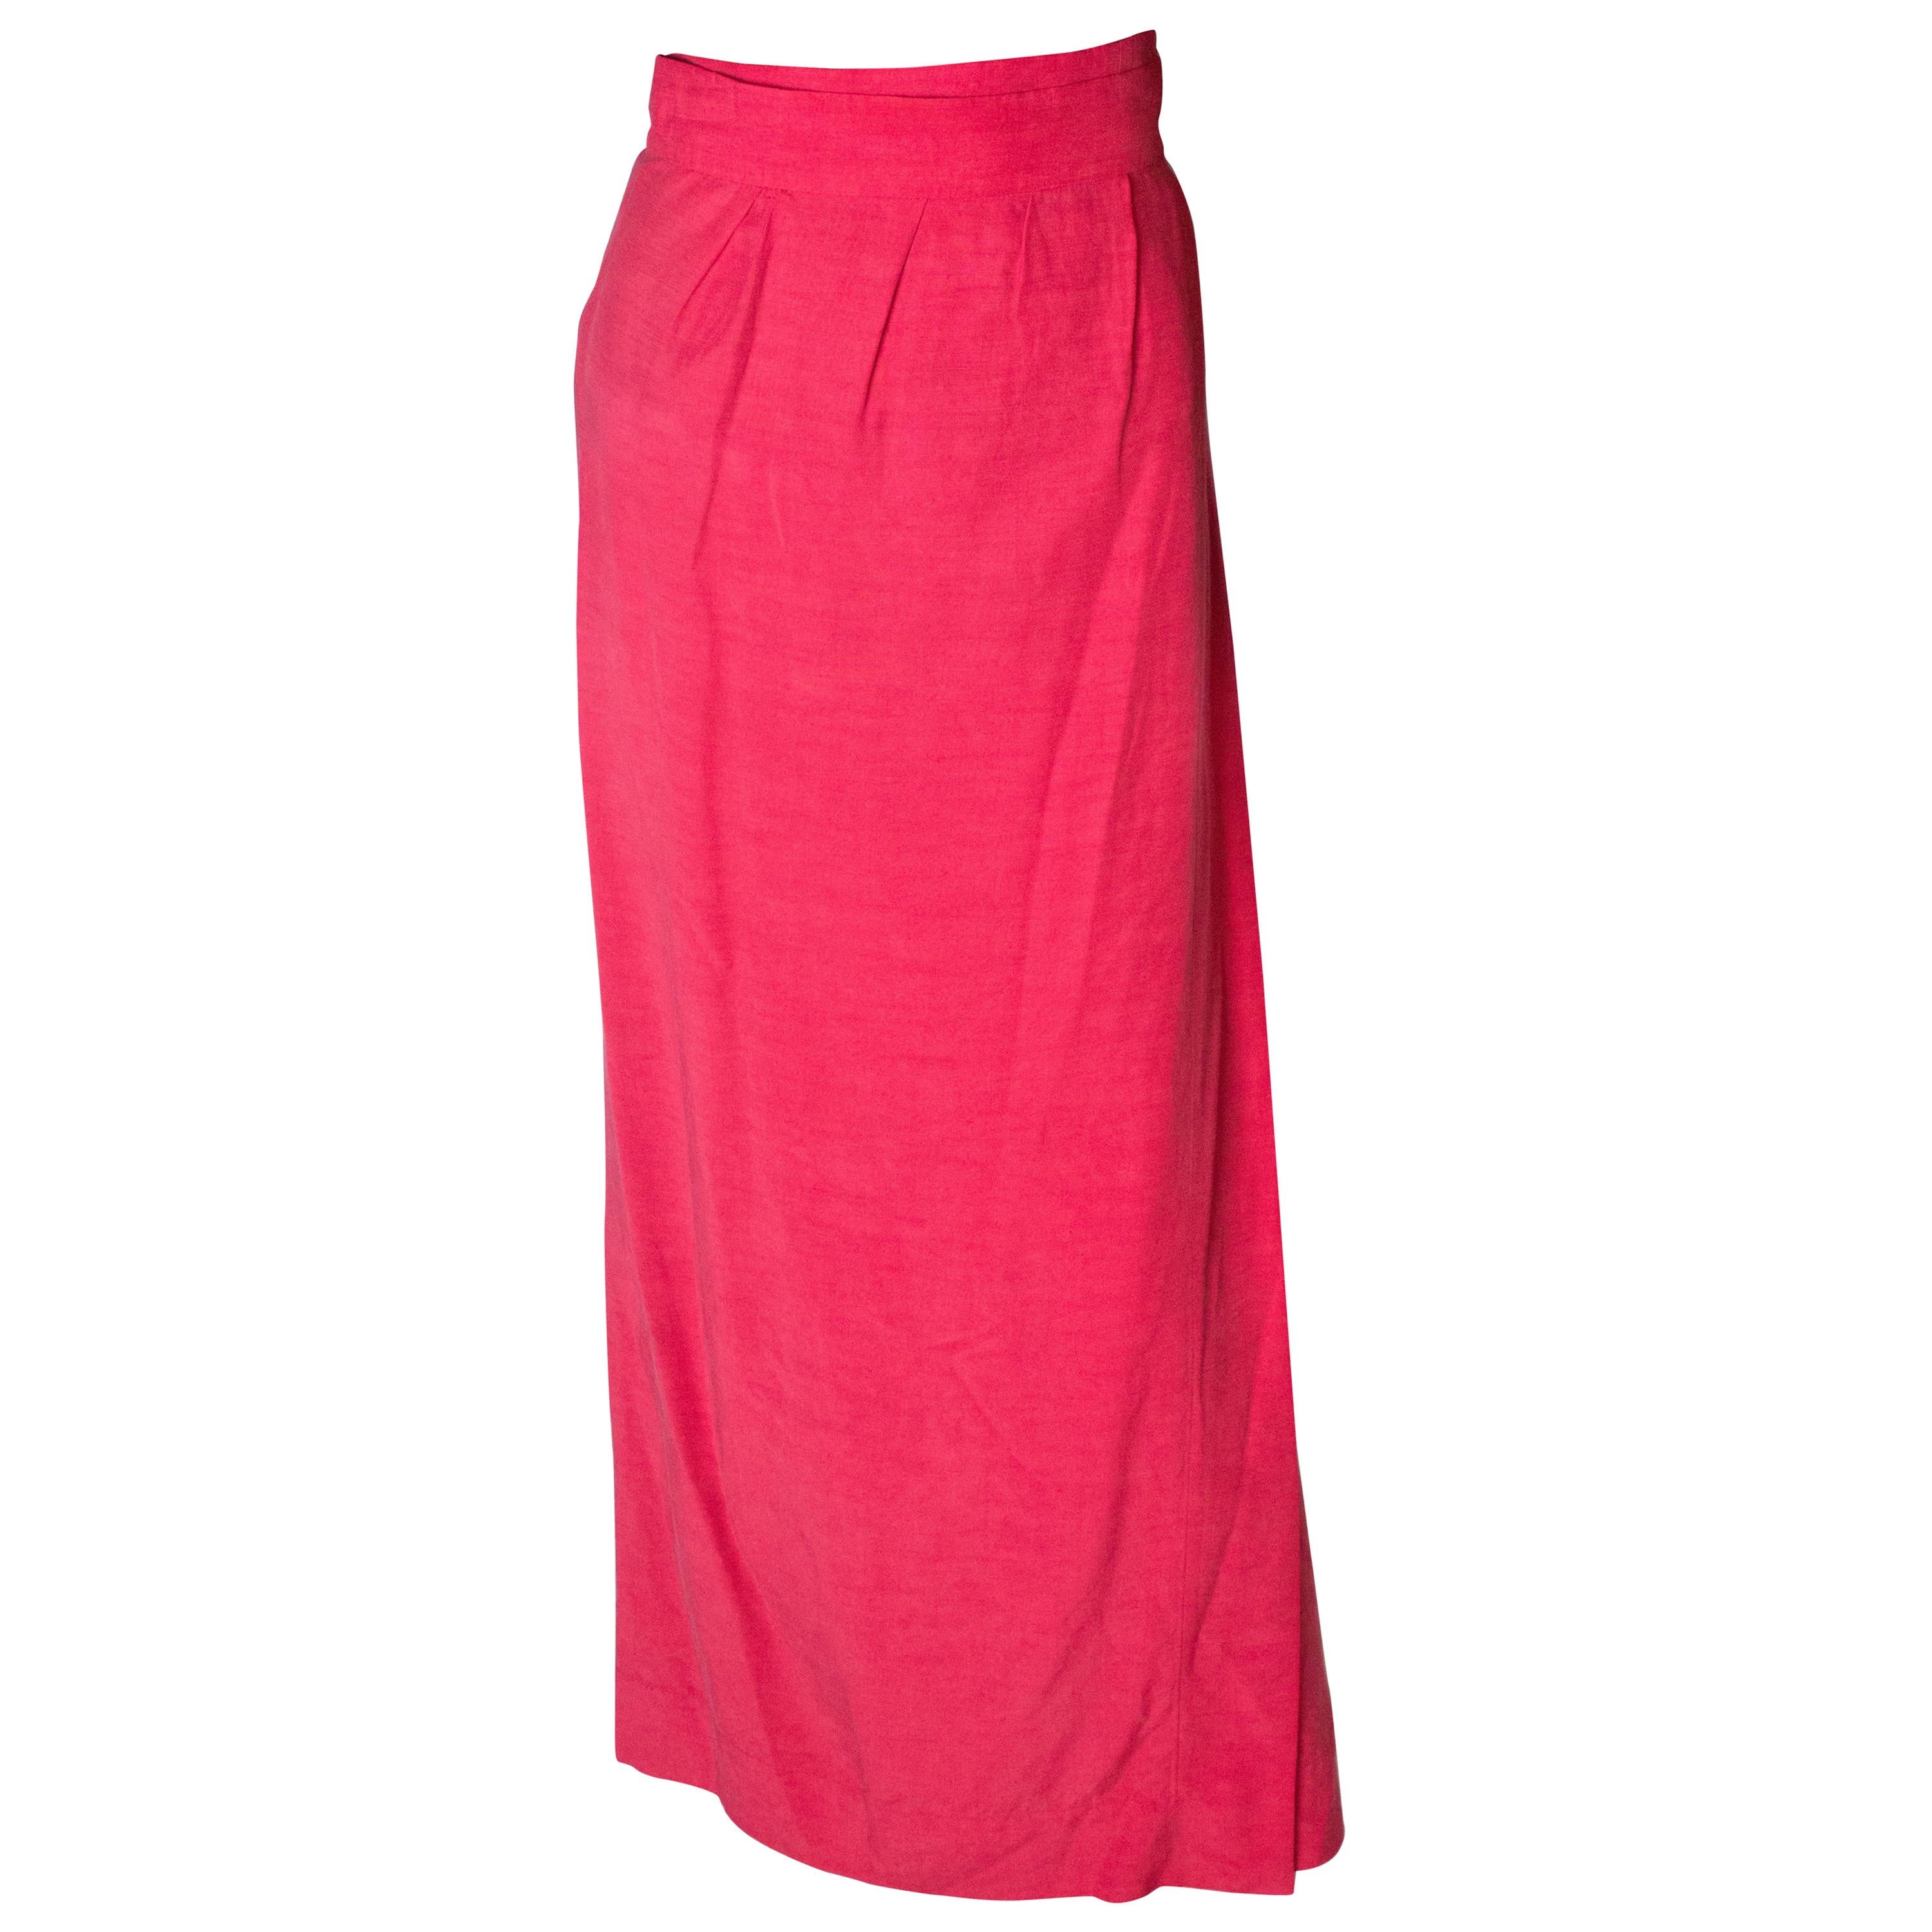 Vintage Yves Saint Laurent Rive Gauche Raspberry Pink Skirt